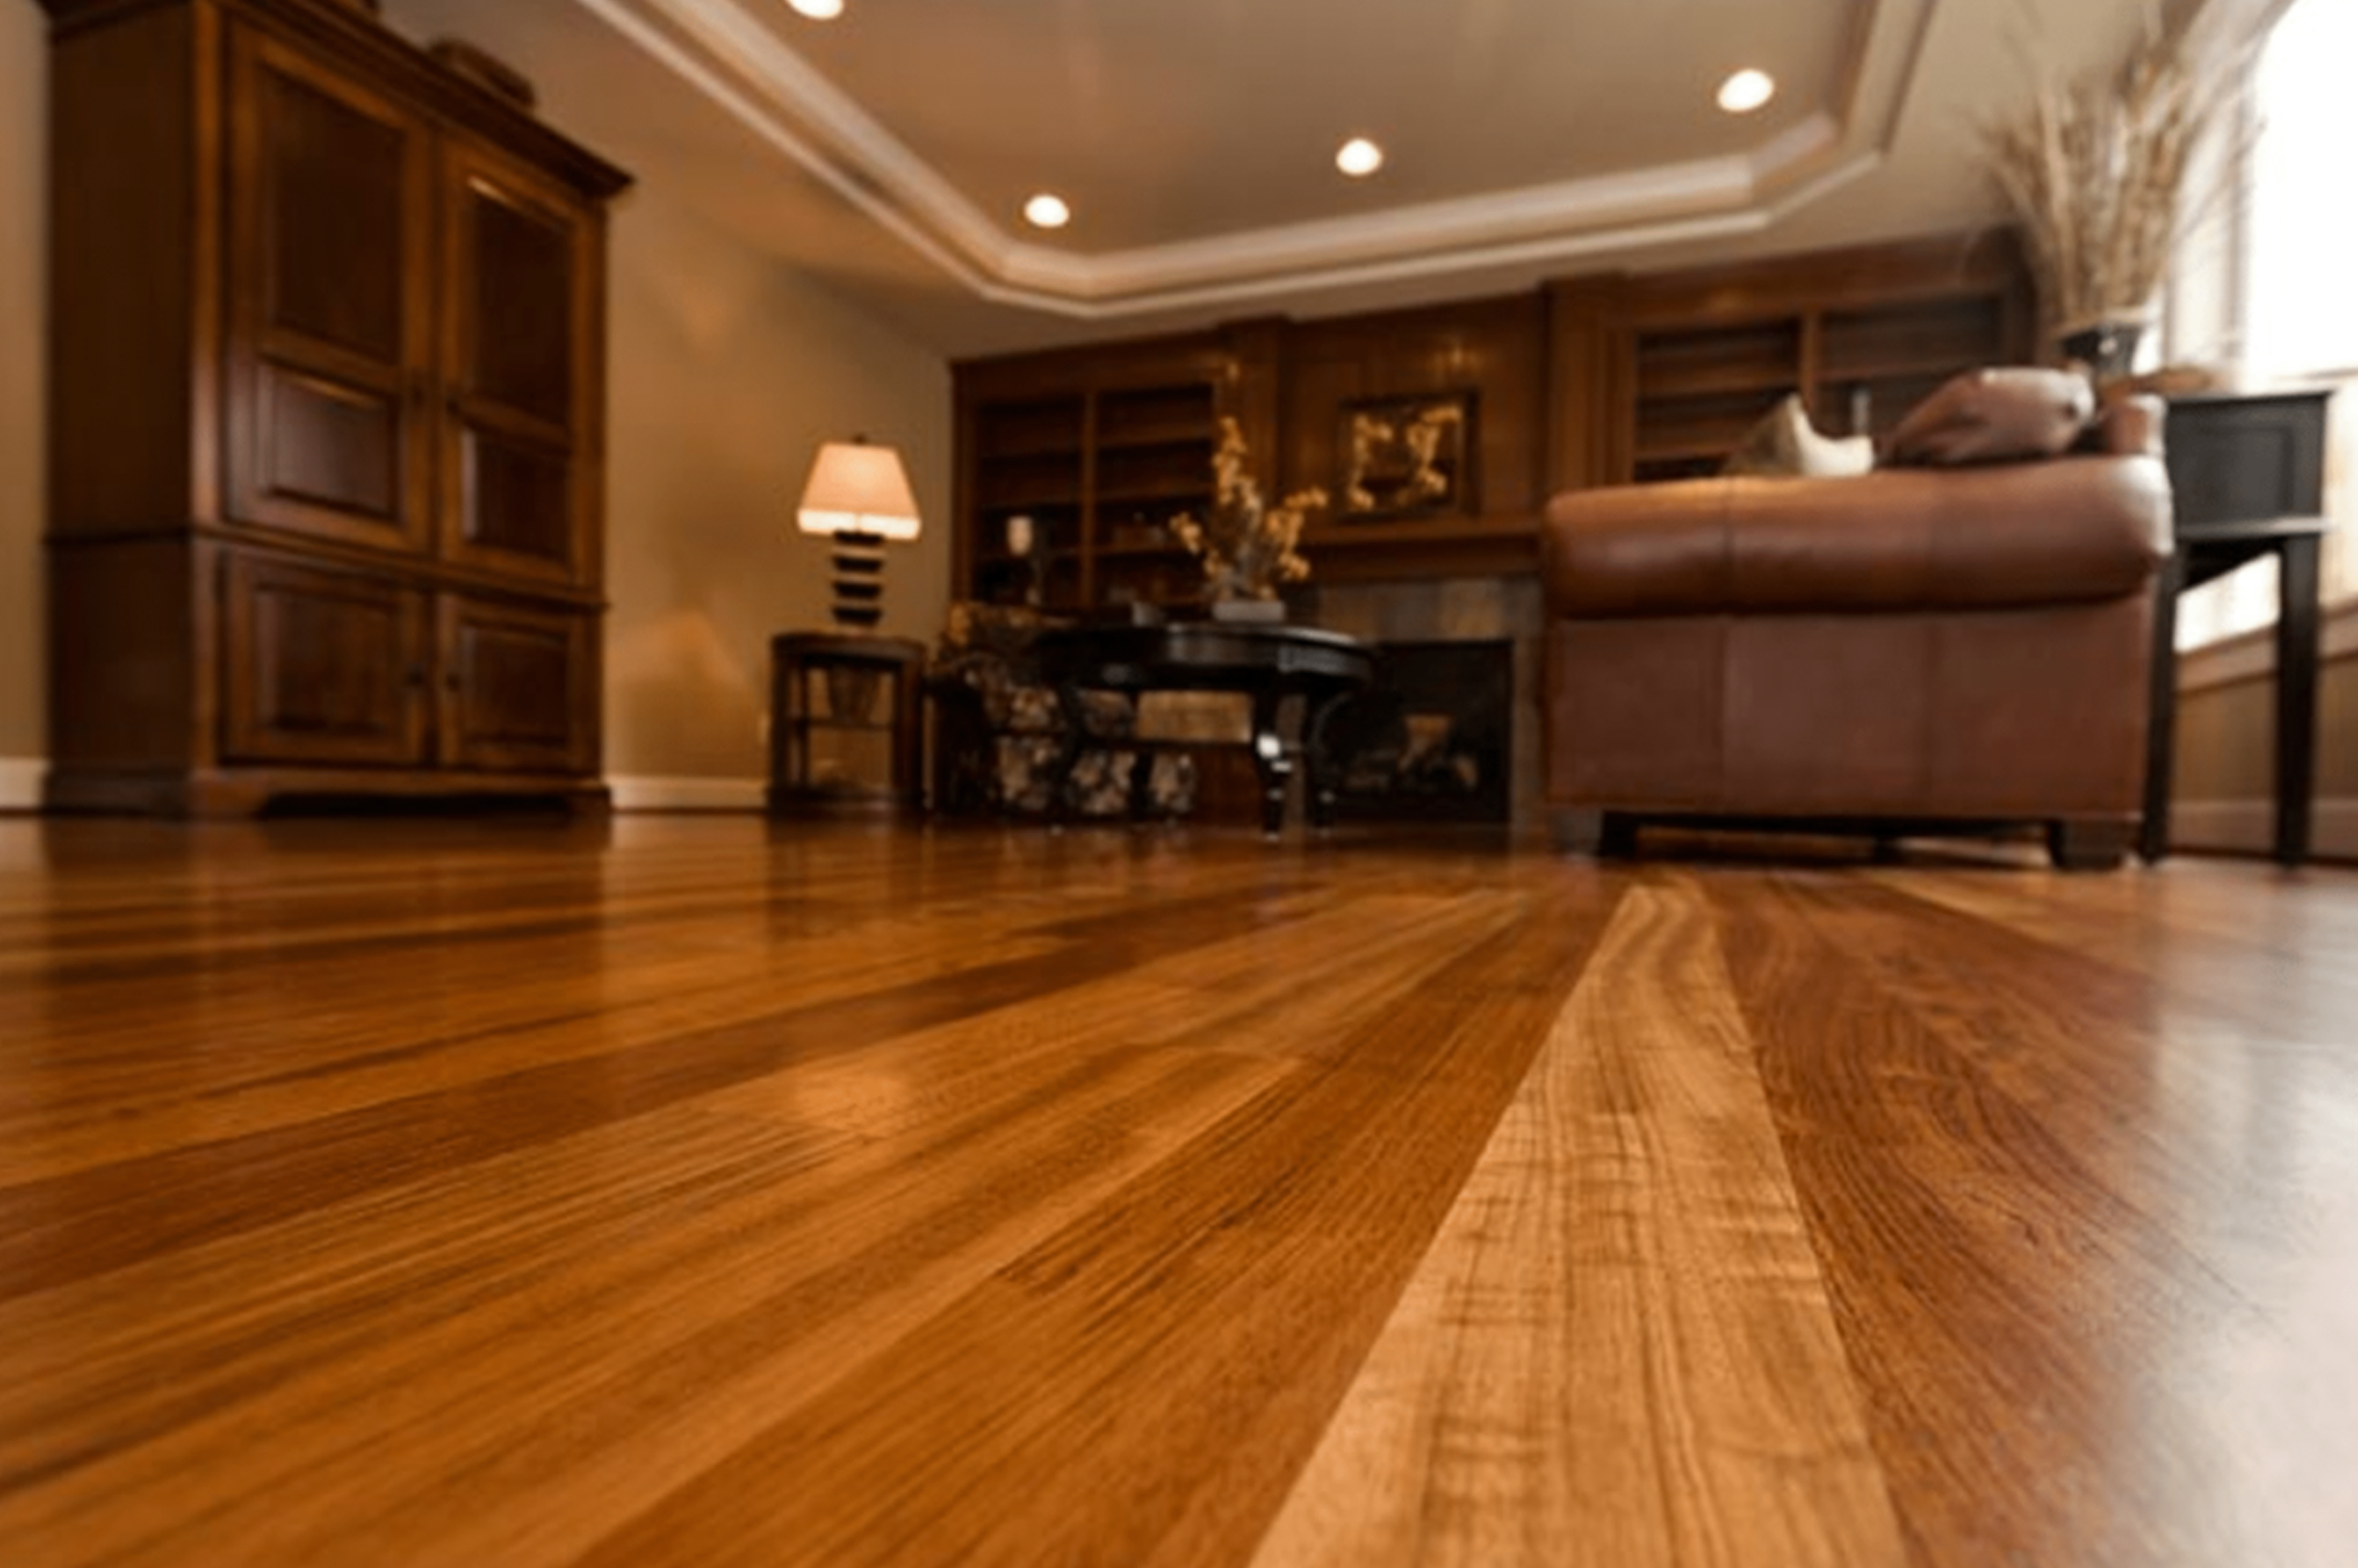 wood floor polishing